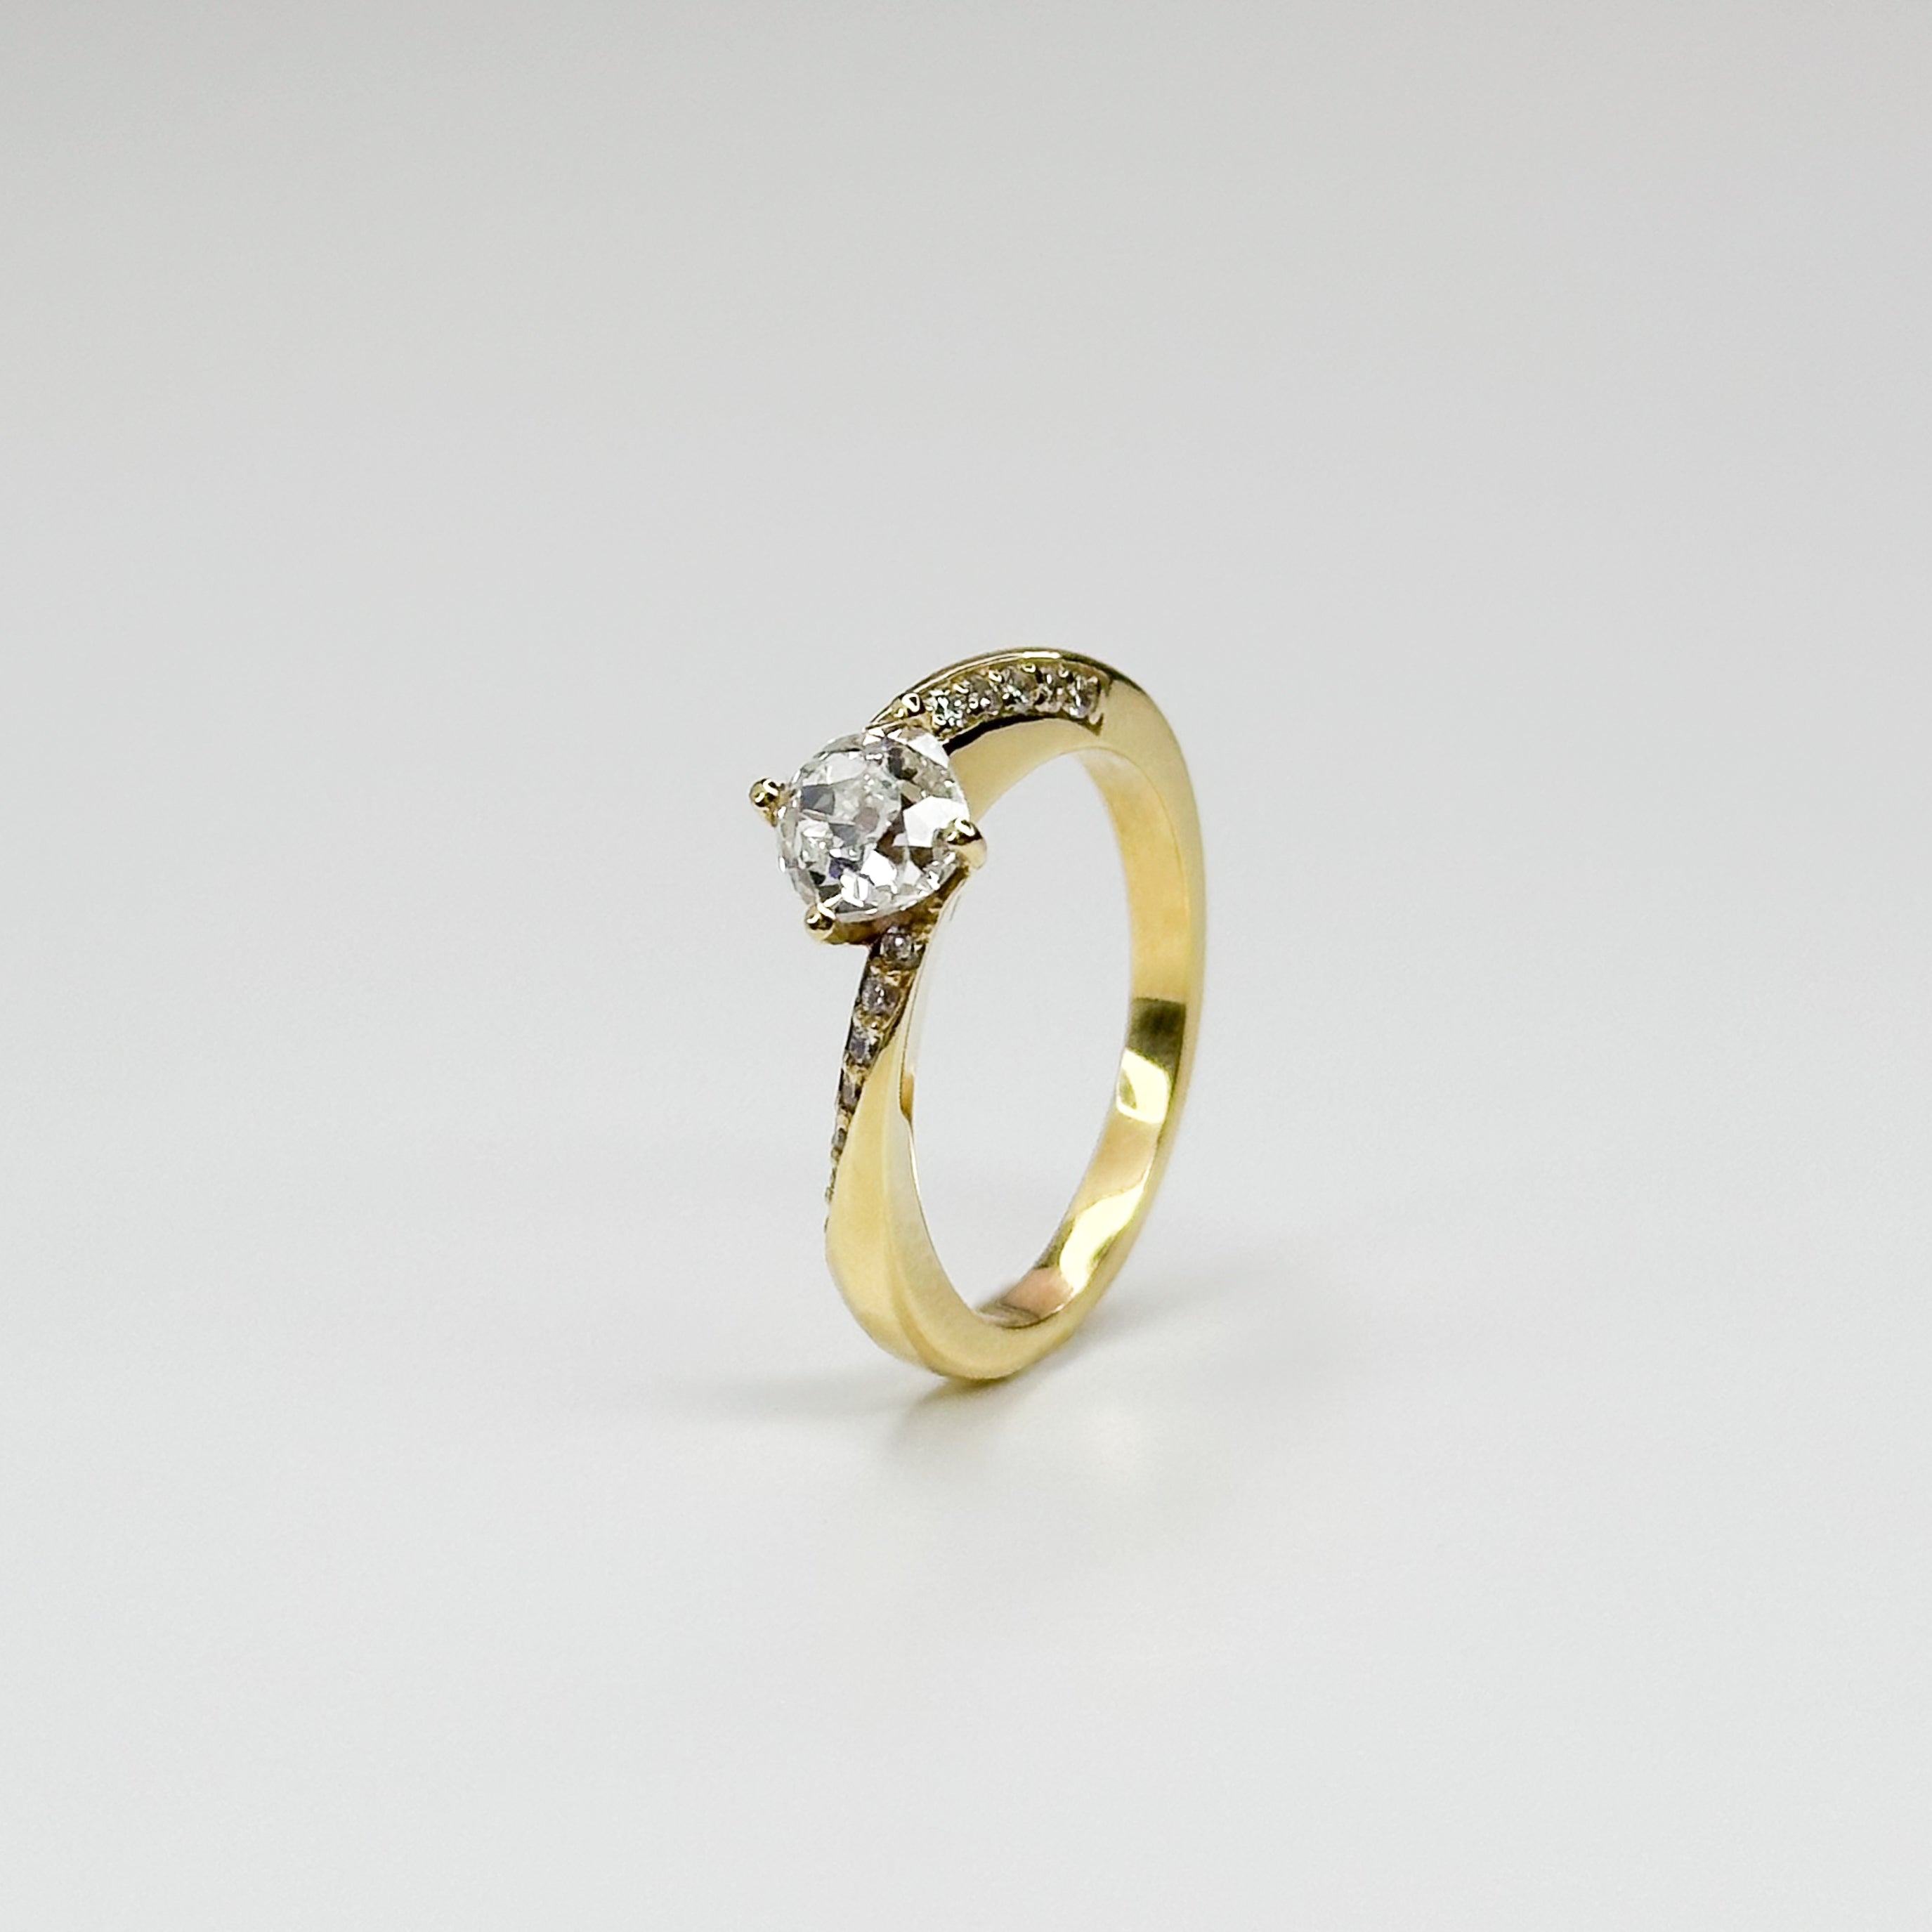 0.86ct Diamond Ring in Yellow Gold